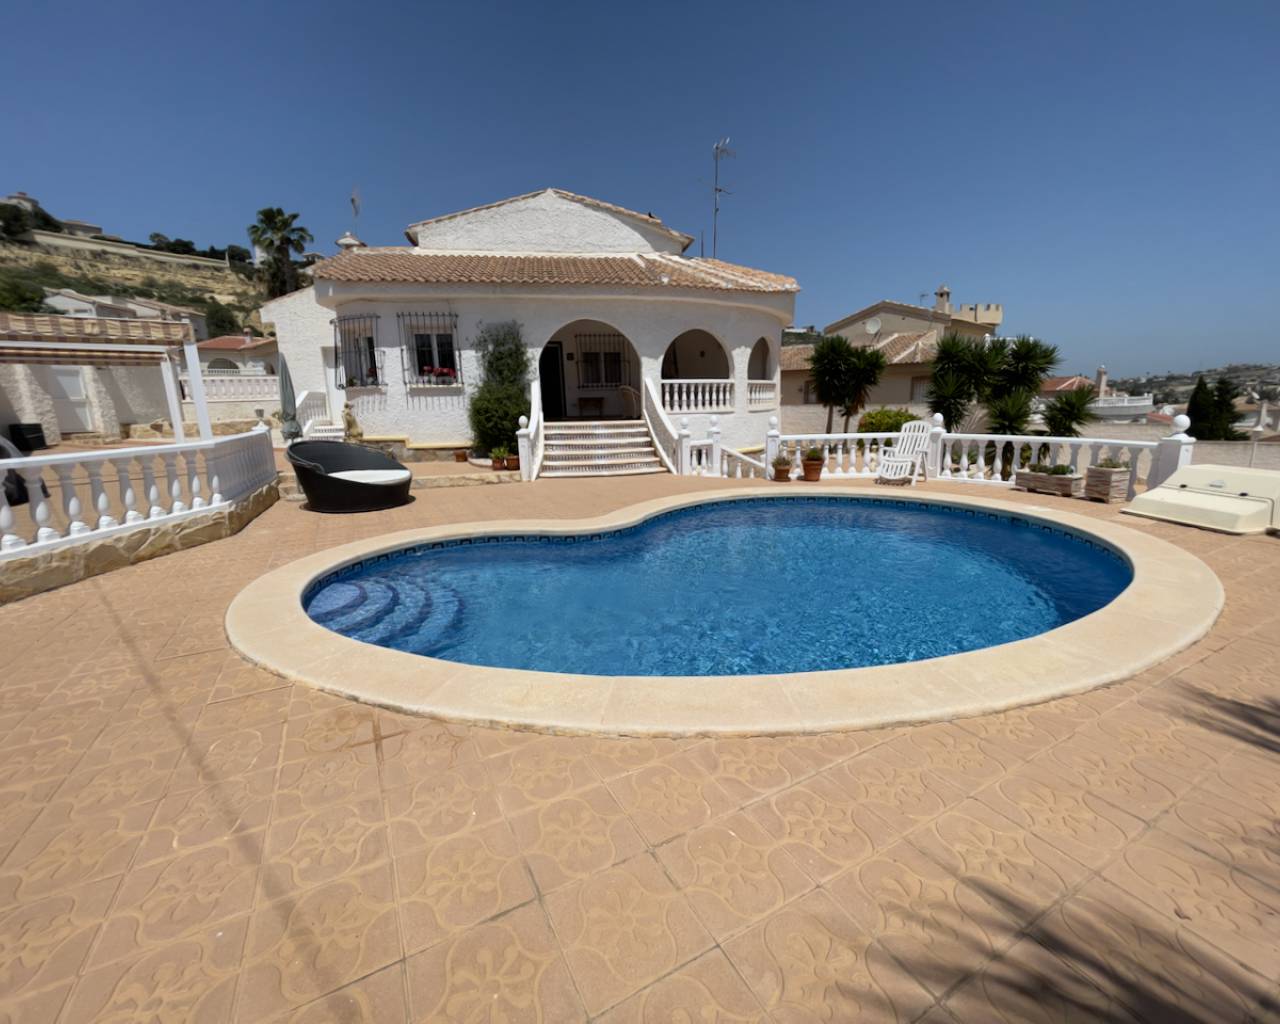 4 bedroom house / villa for sale in Rojales, Costa Blanca